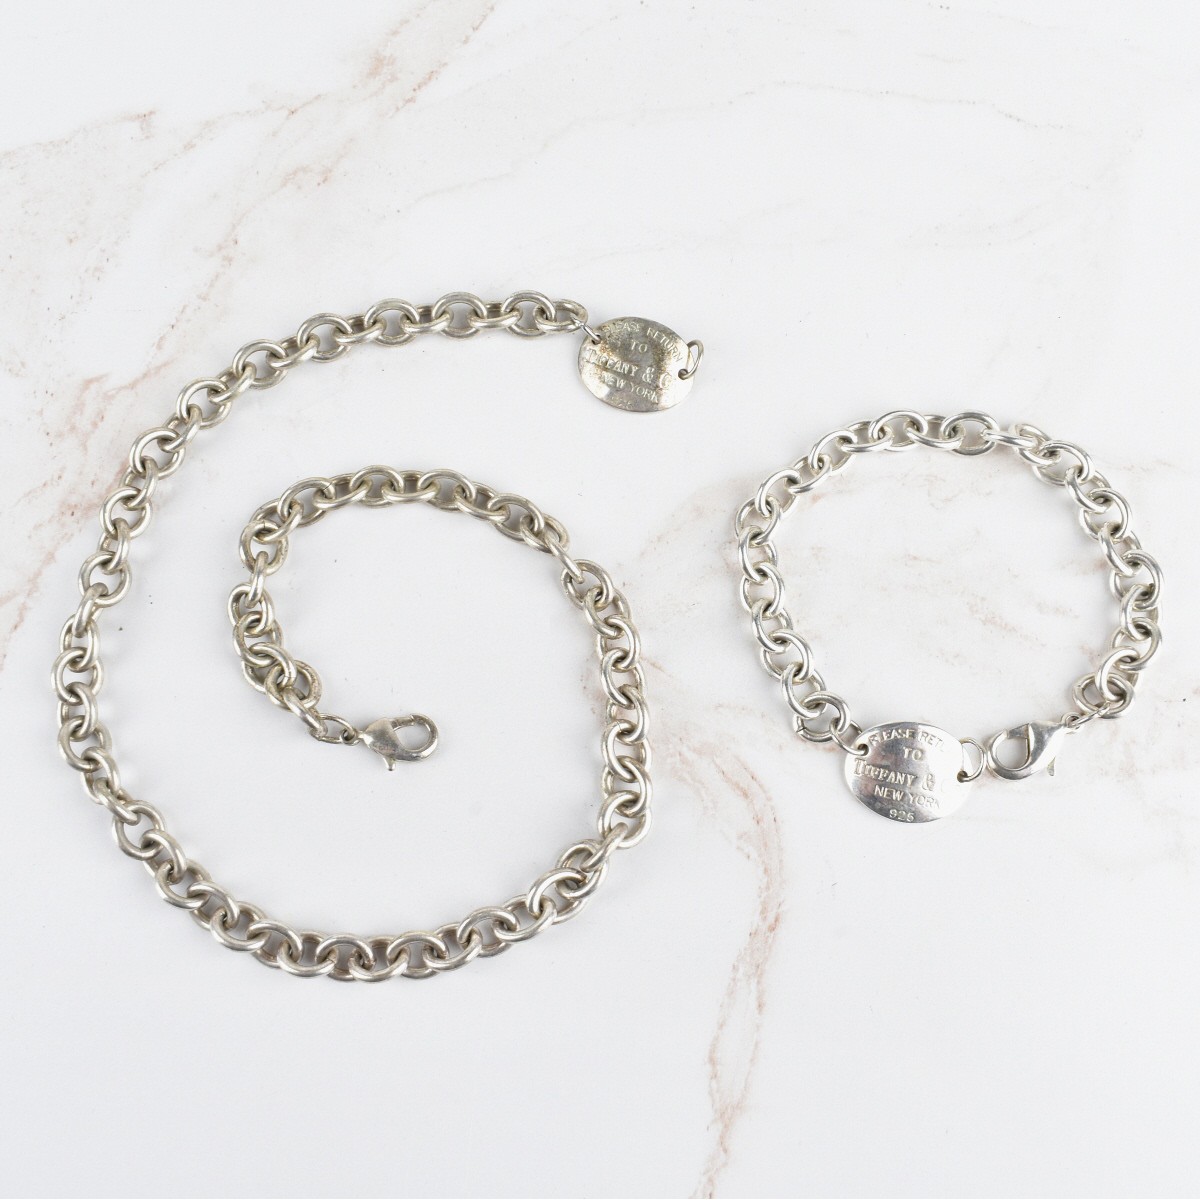 Silver Necklace and Bracelet.